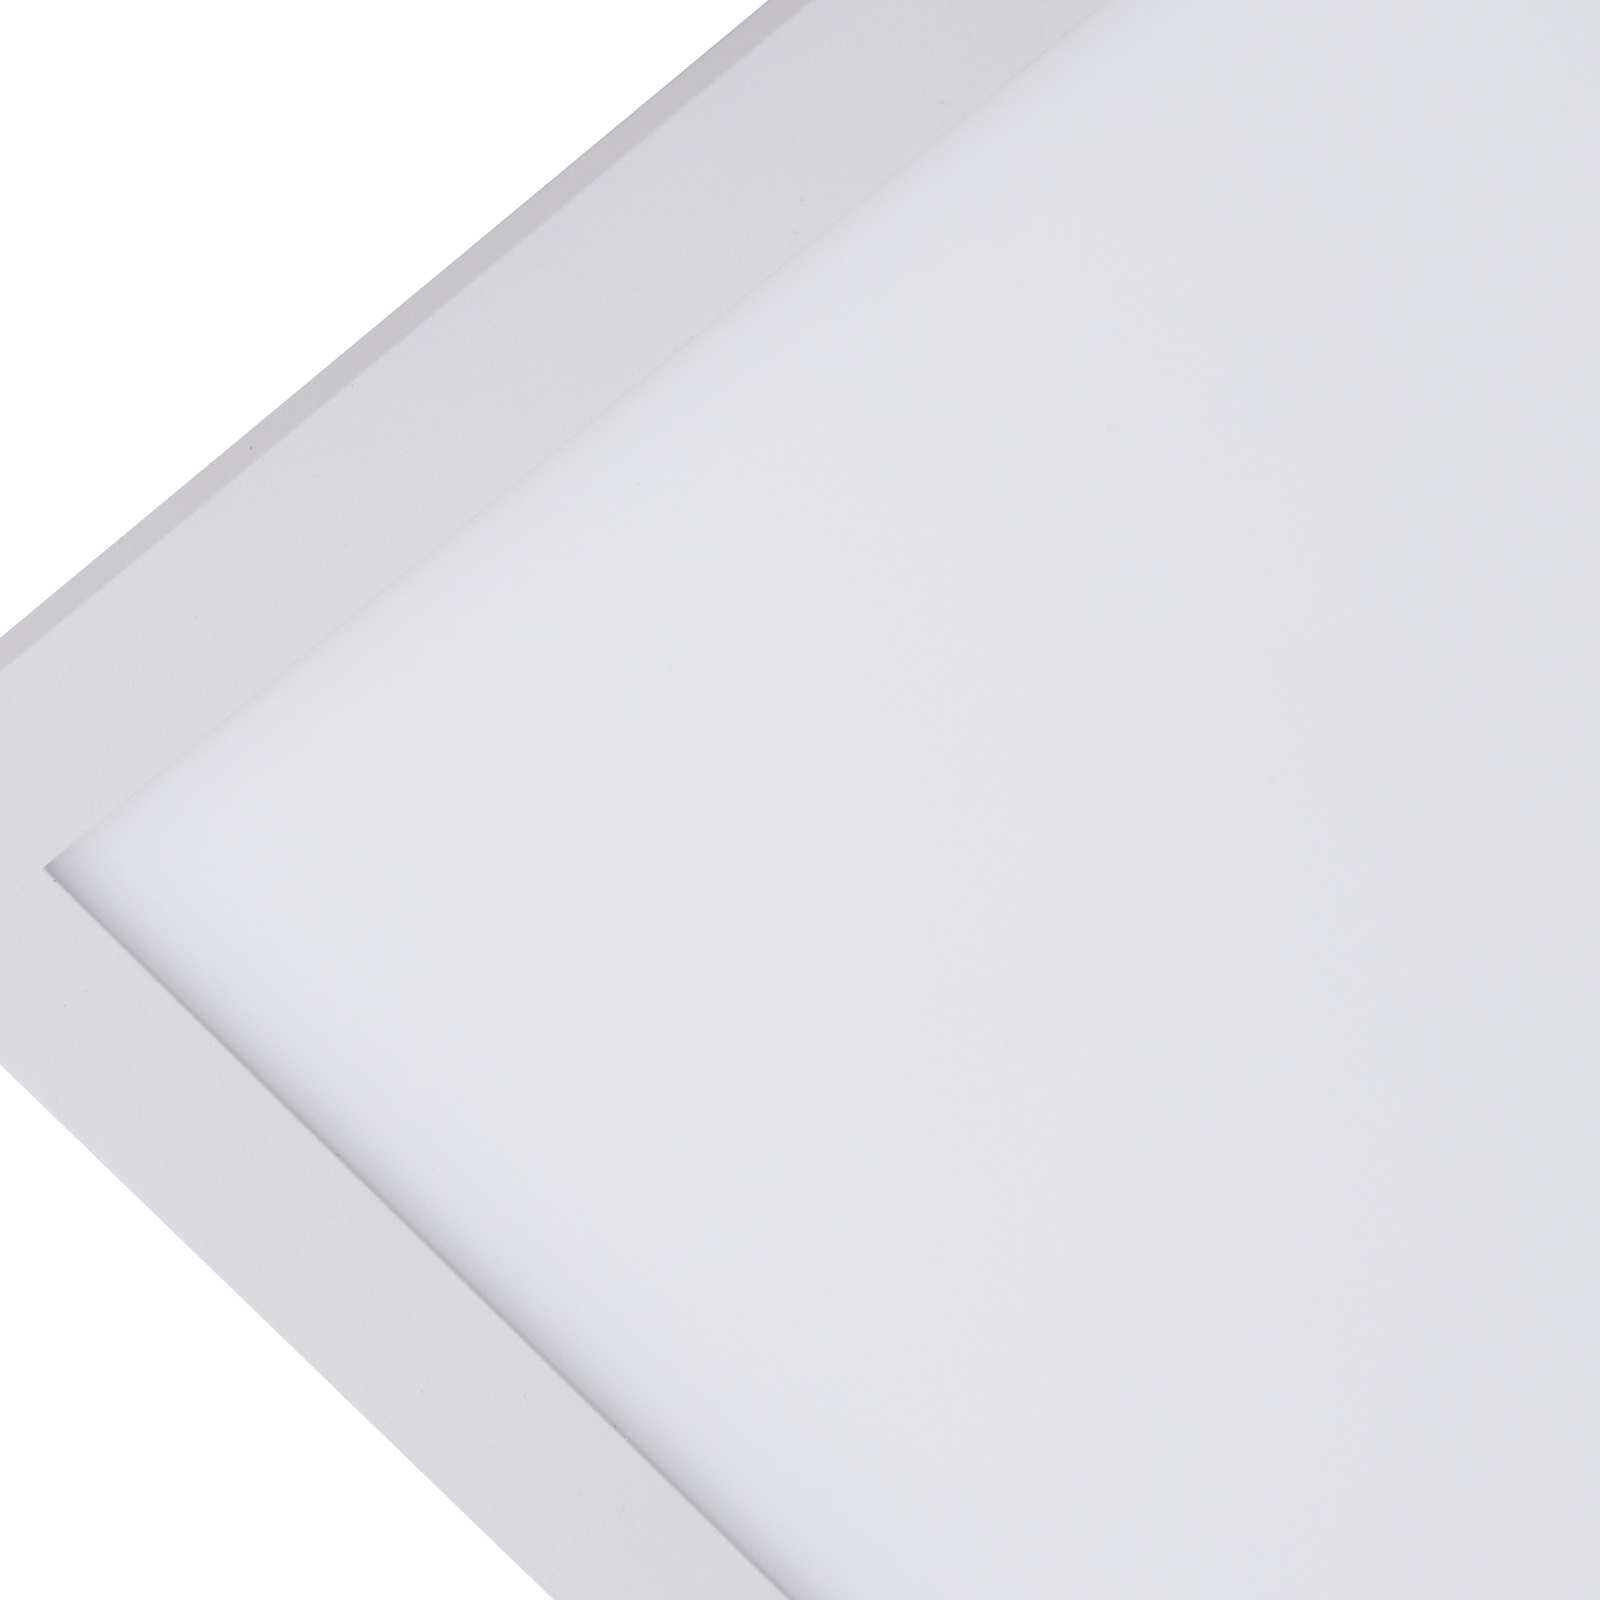 Lindby LED-paneeli Lamin, valkoinen, 80 x 40 cm